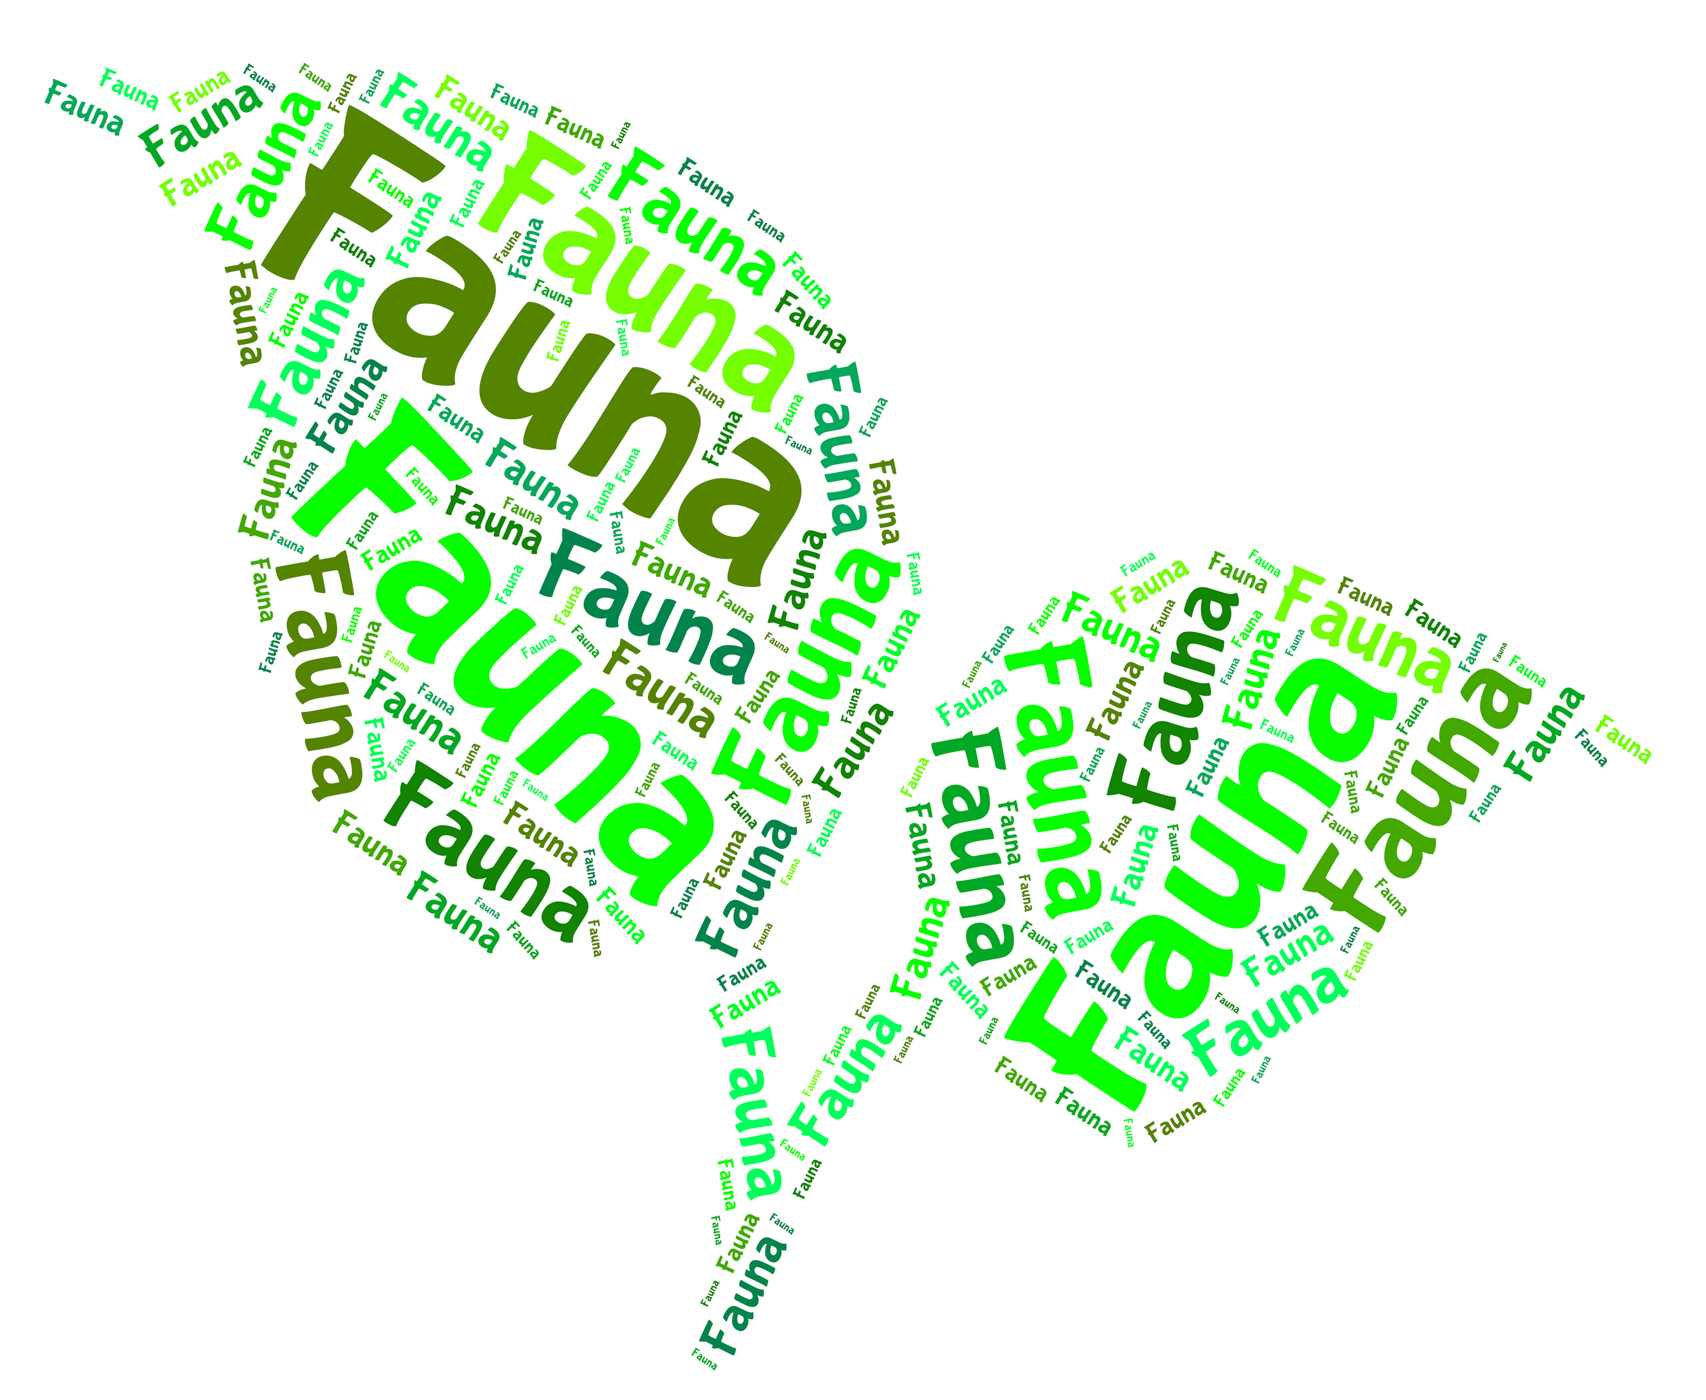 Fauna word represents animal kingdom and area photo